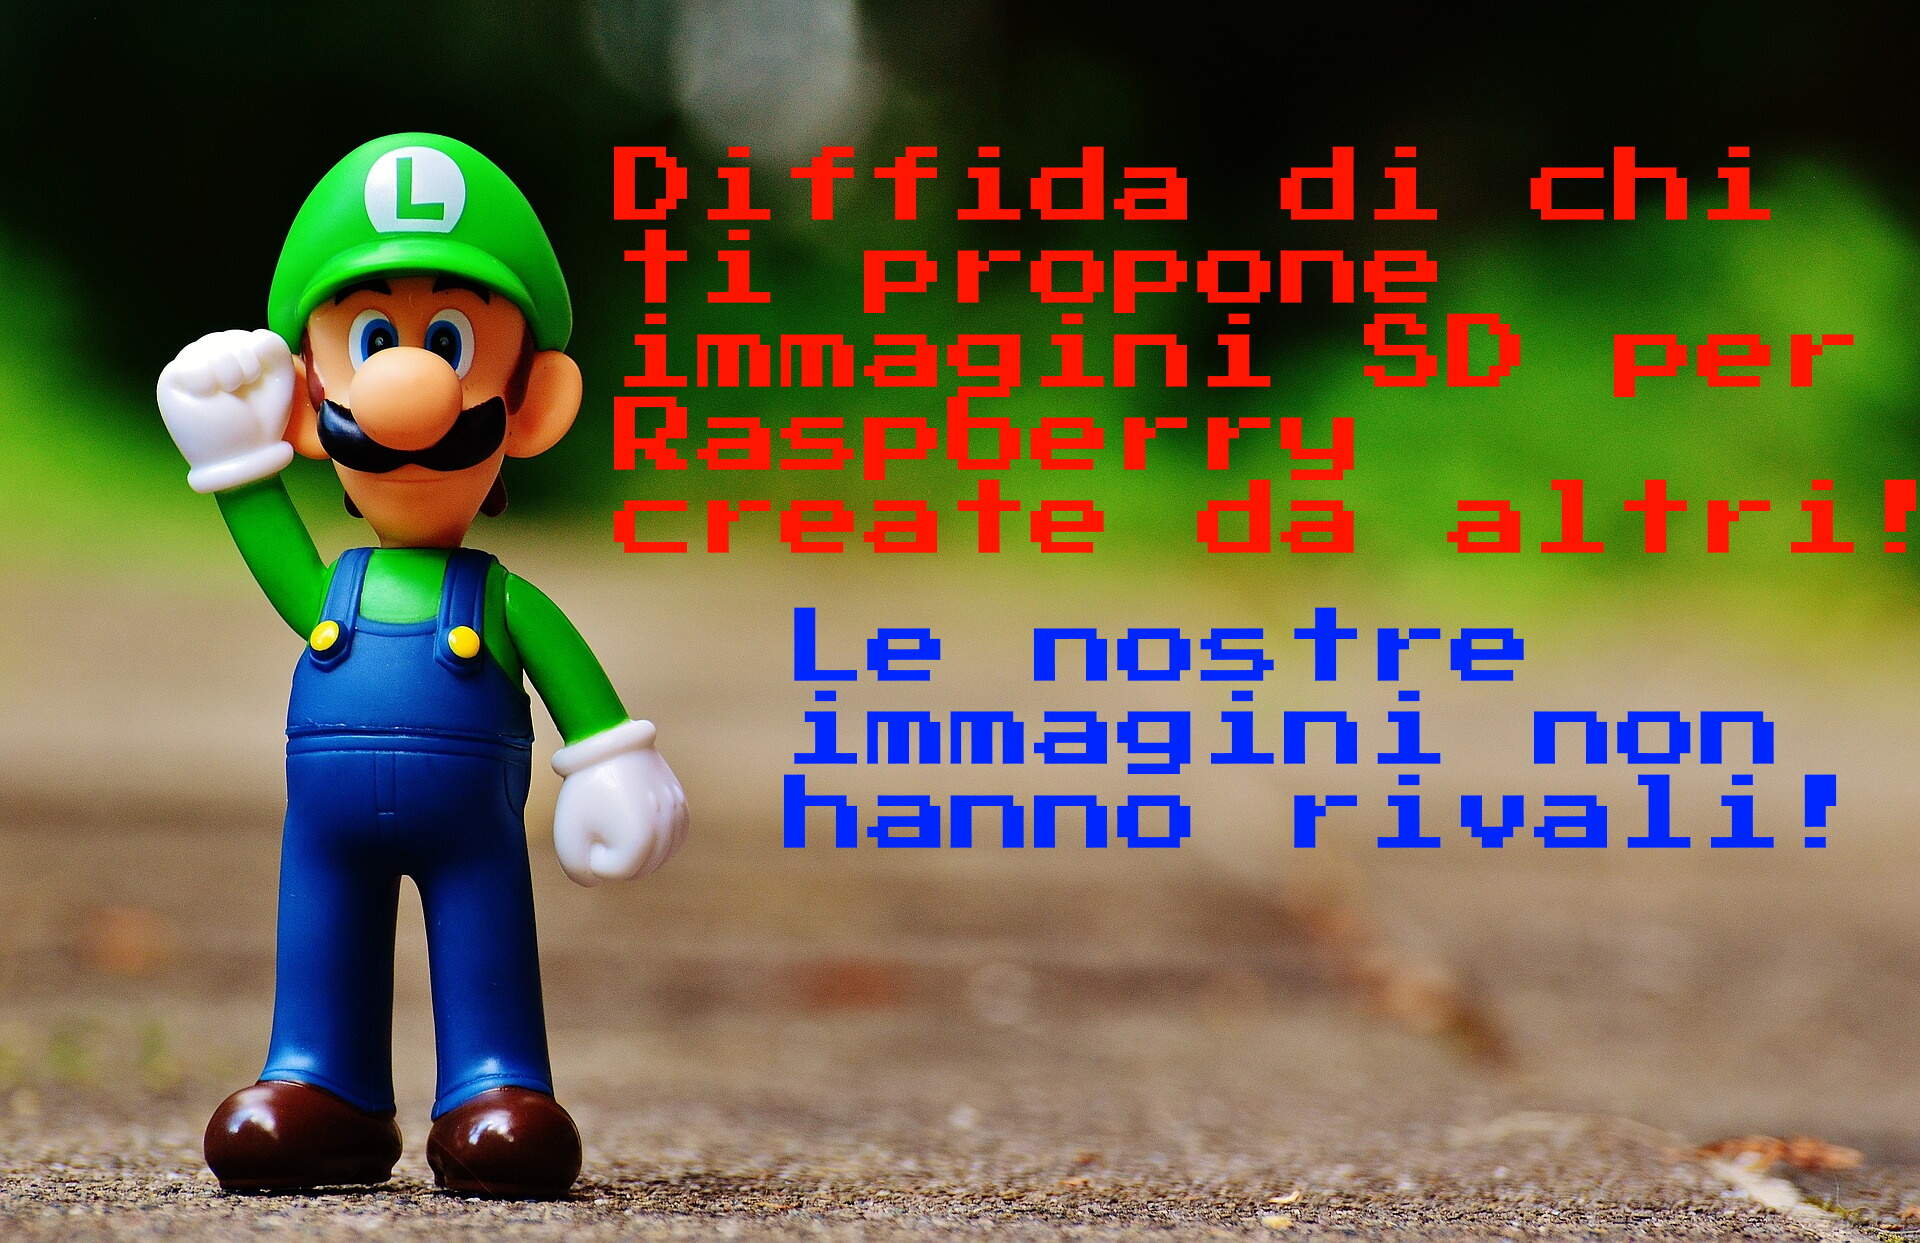 Raspberry PI giochi arcade Luigi